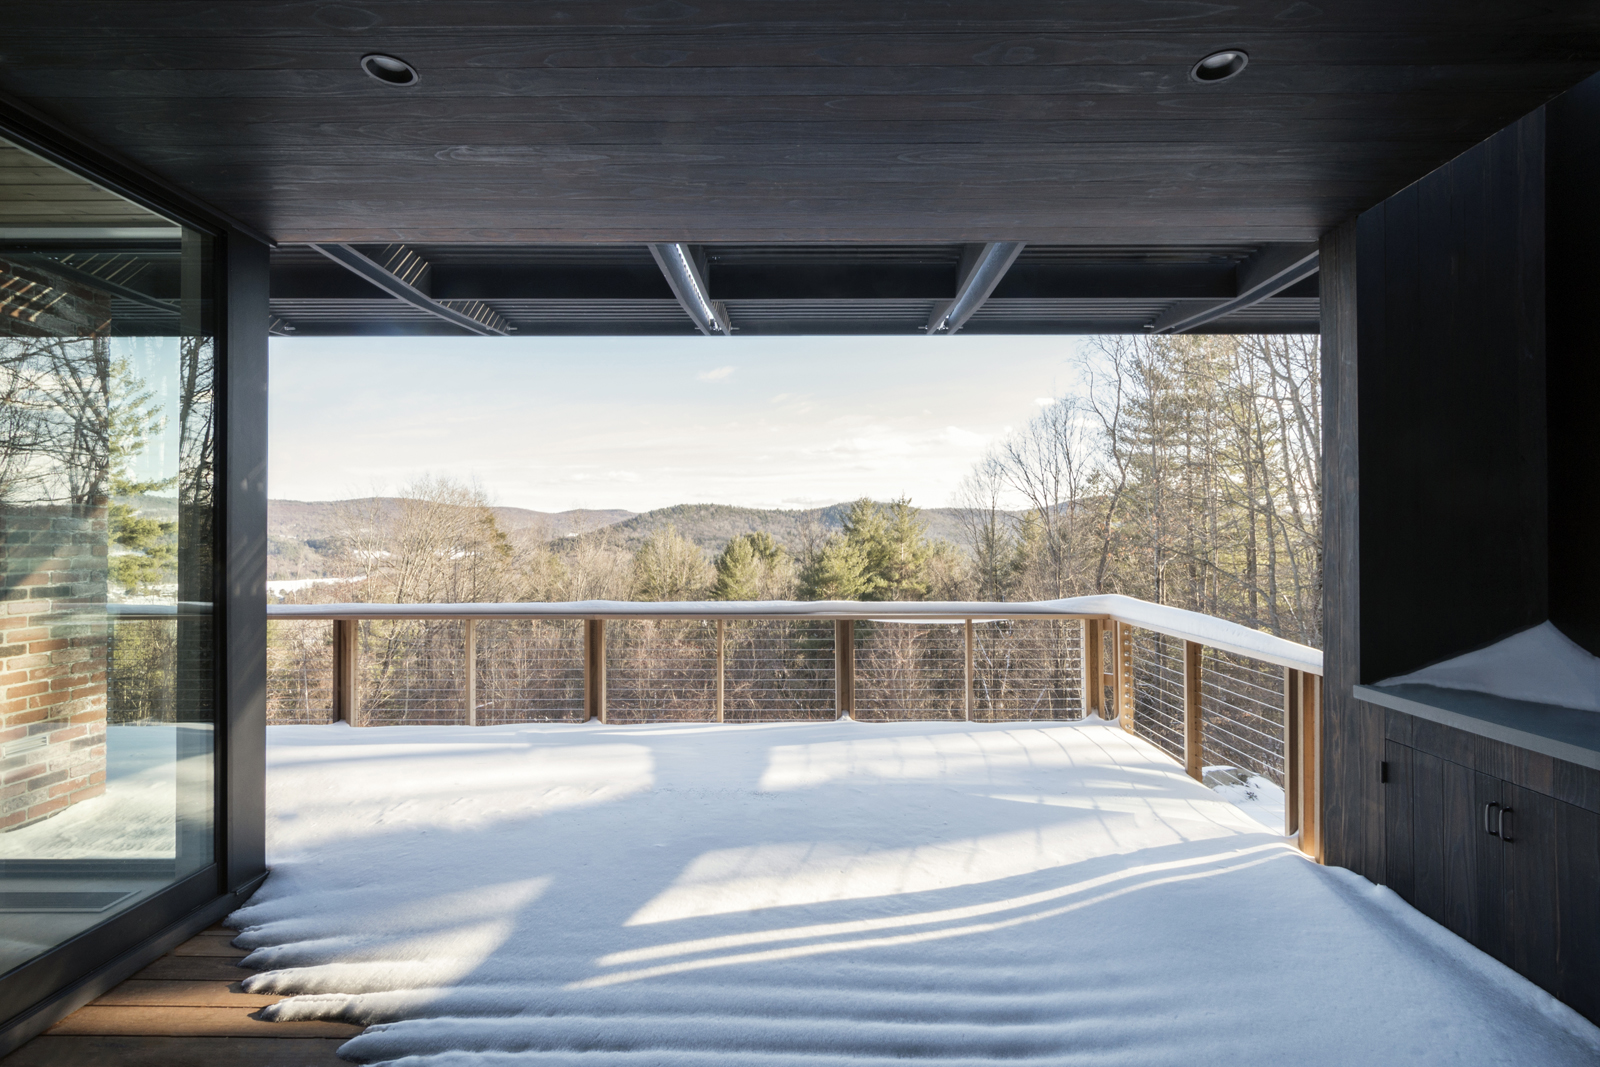 04-res4-resolution-4-architecture-modern-modular-prefab-home-cornwall-cabin-exterior-winter.jpg